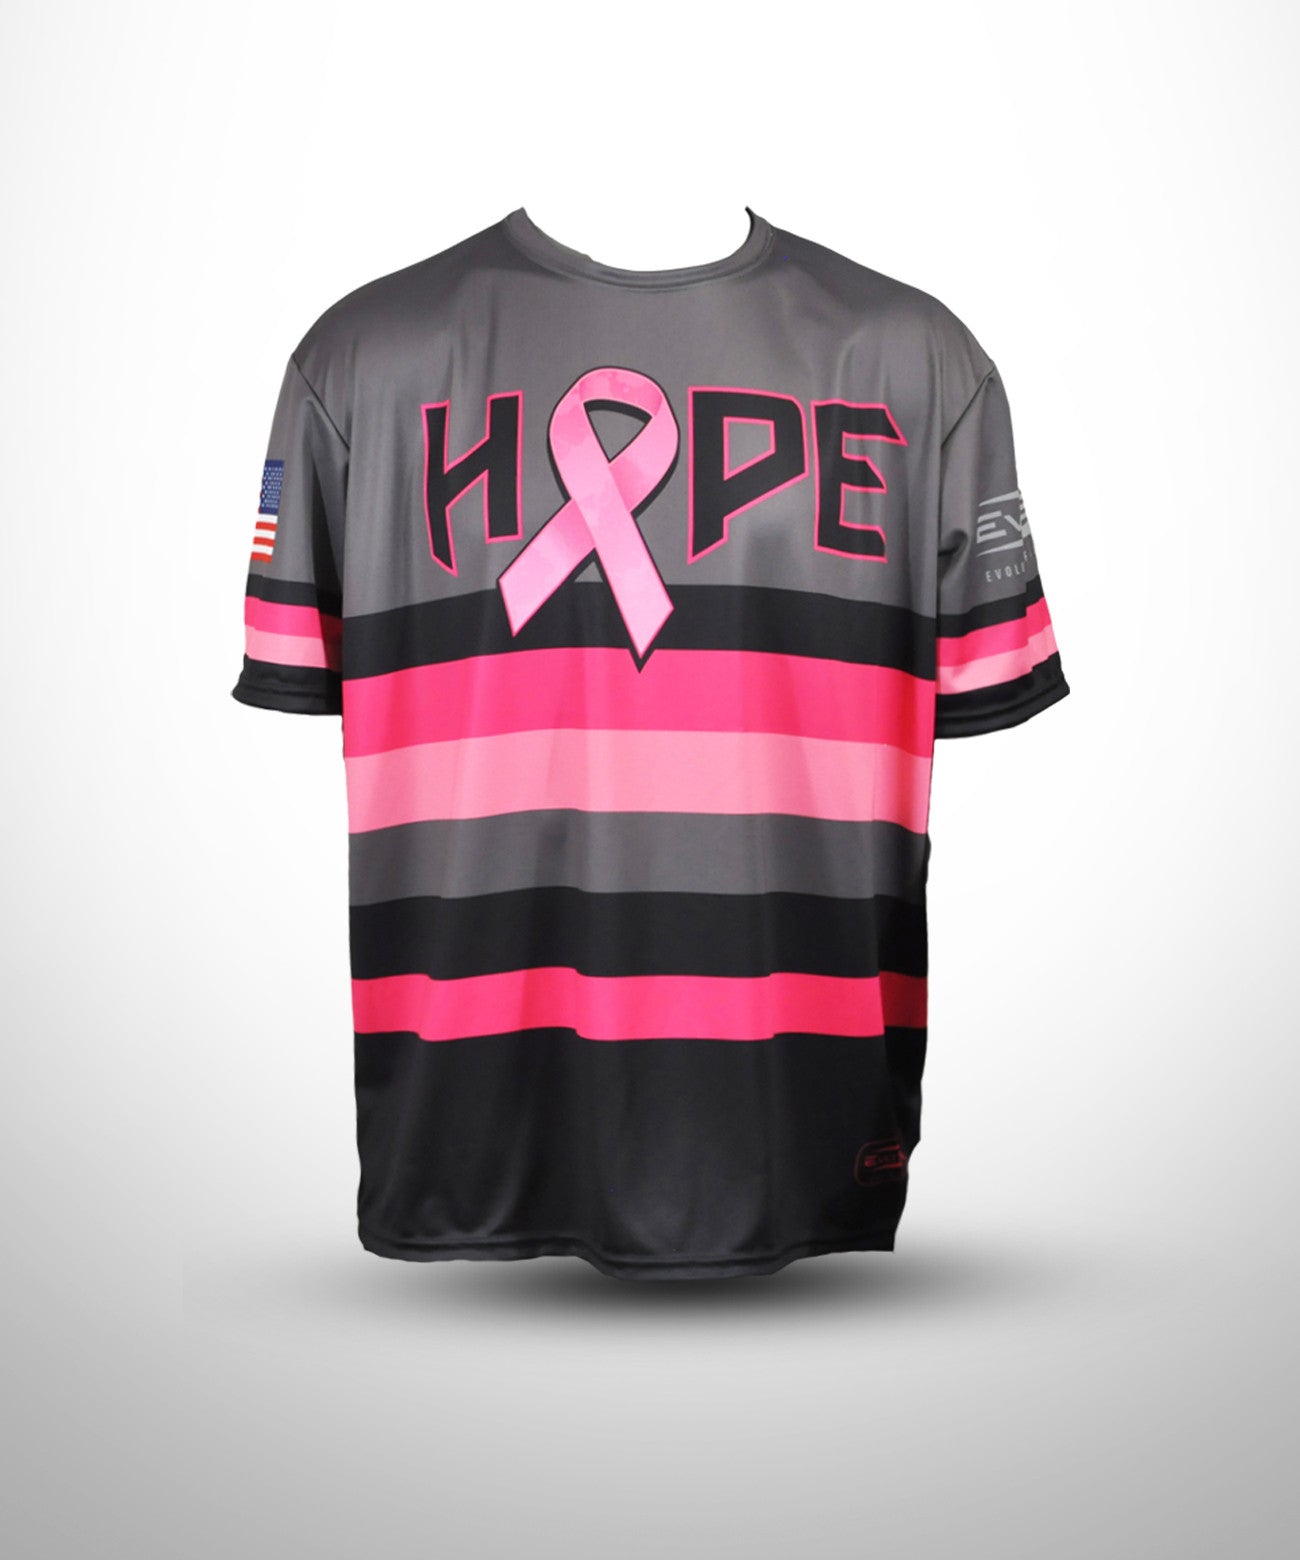 Breast Cancer Awareness October Sublimation T-shirt 